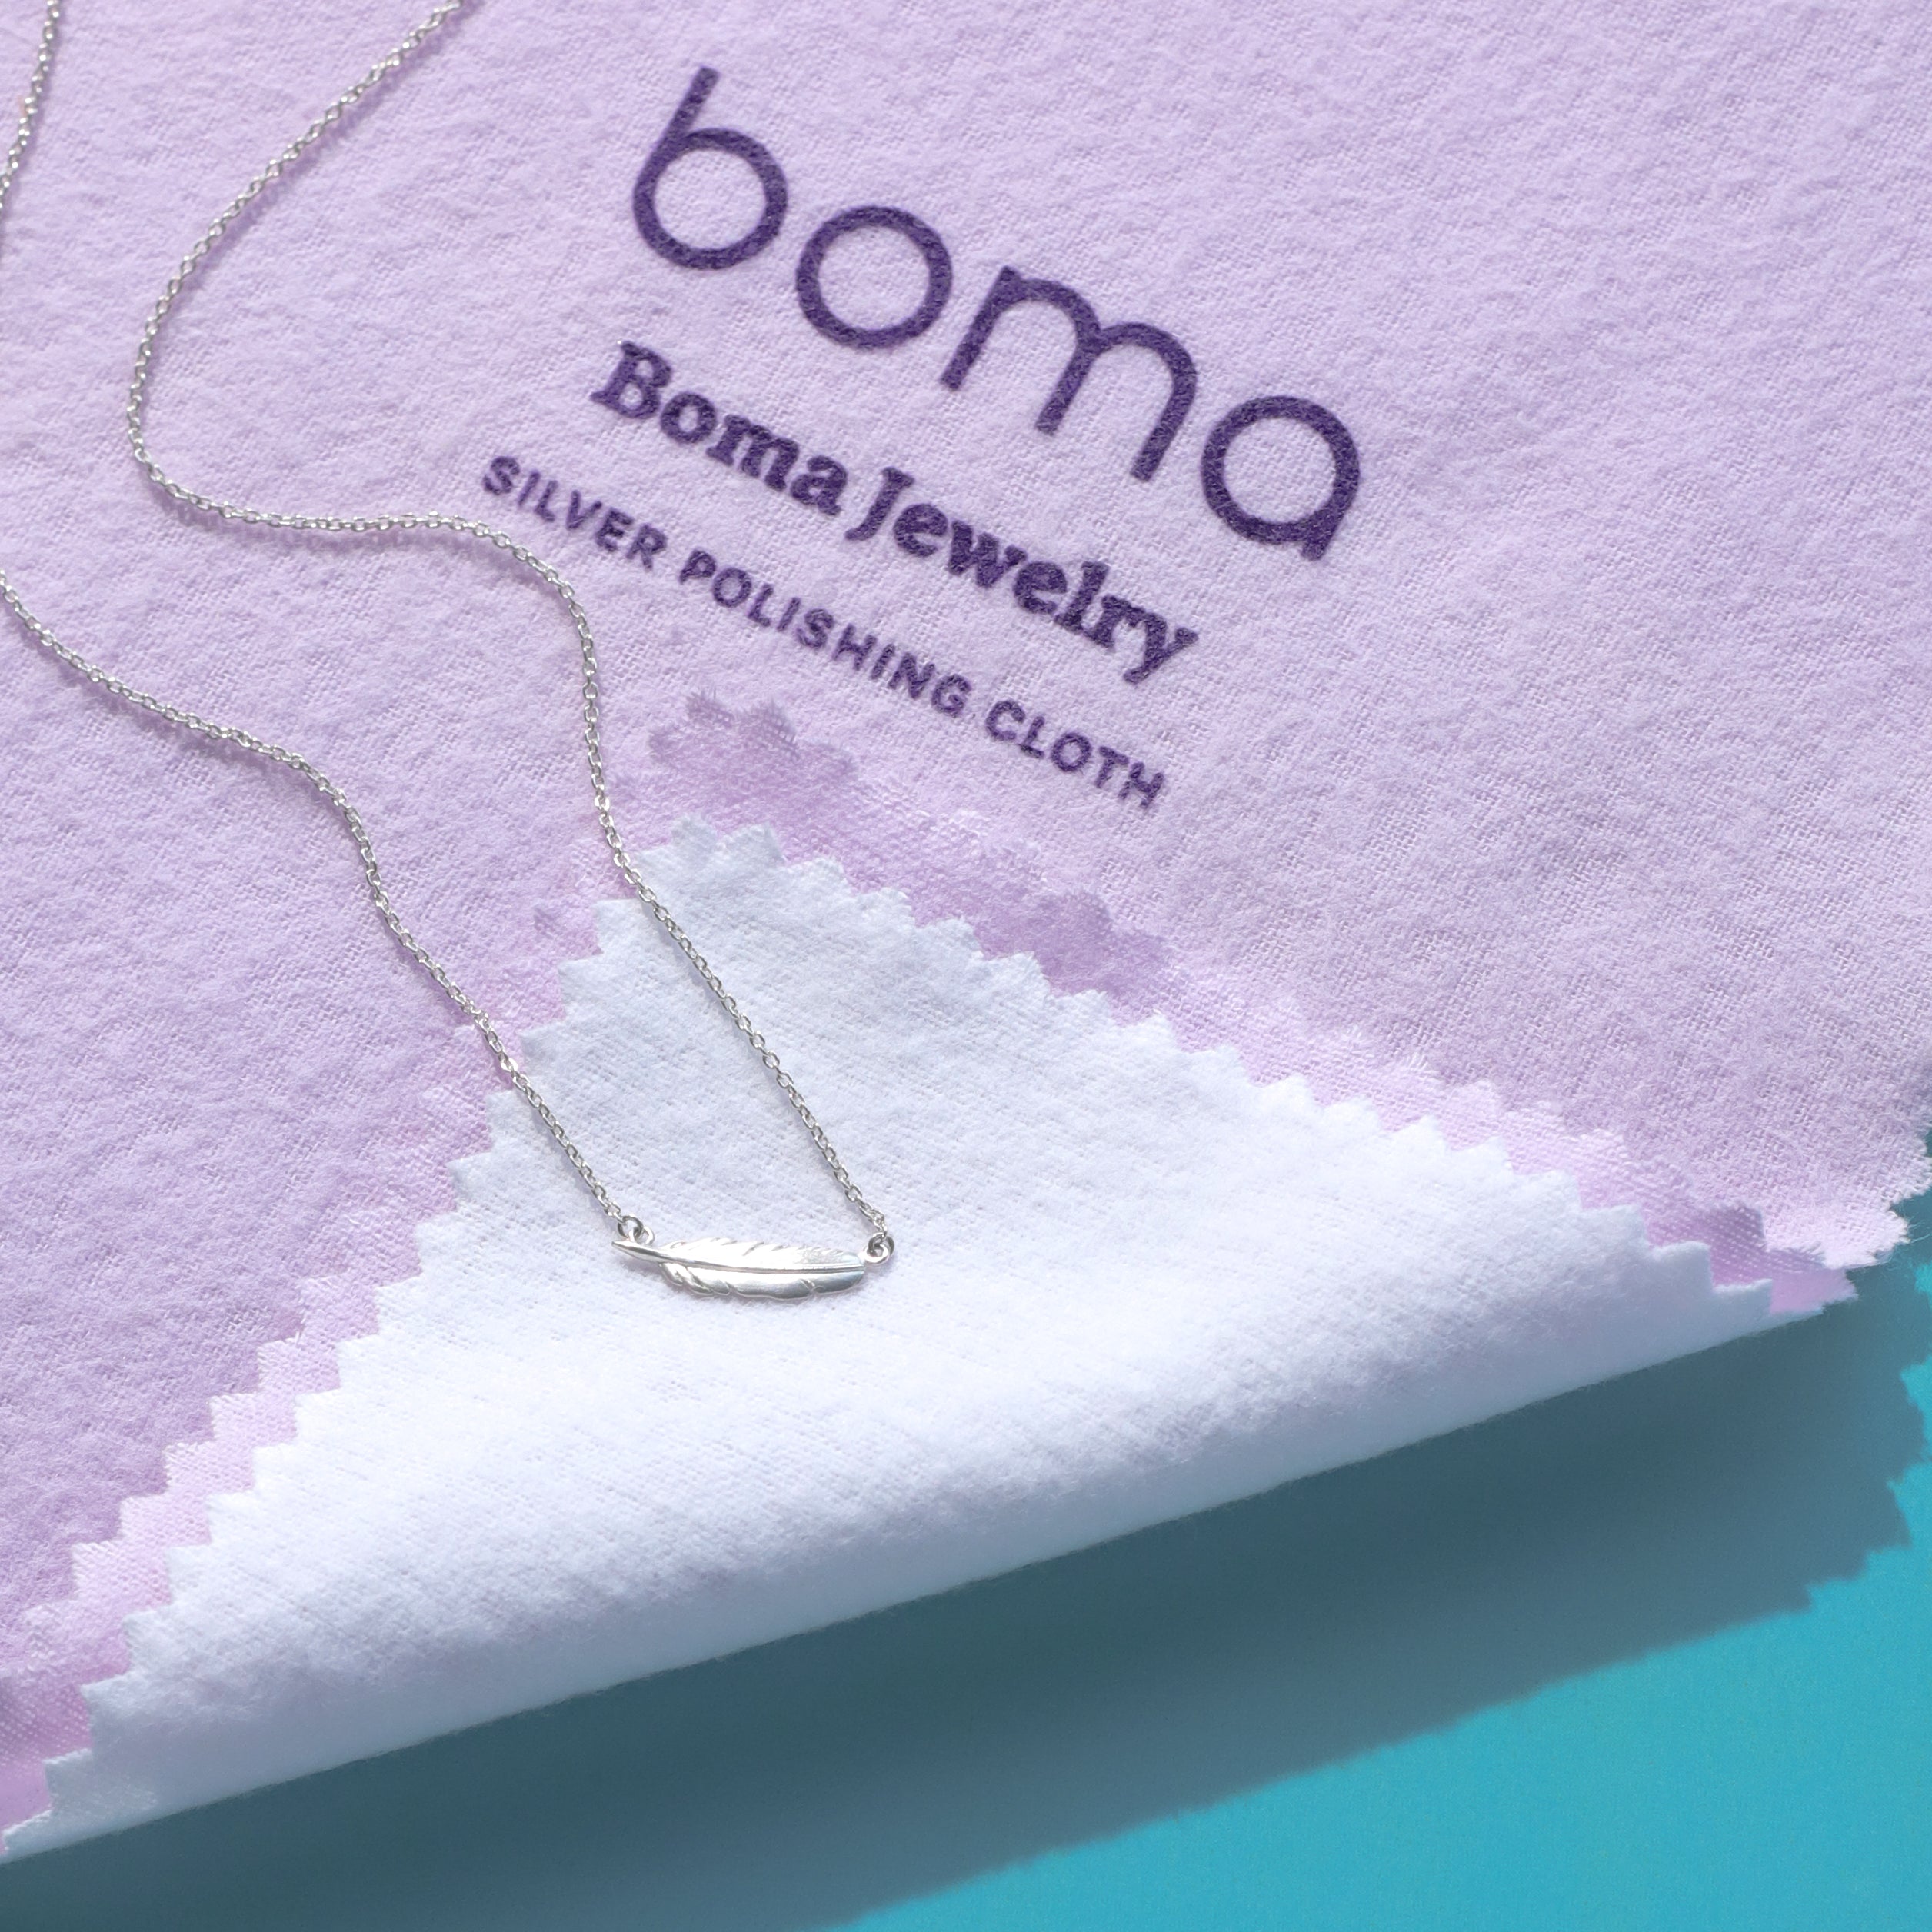 Boma Jewelry Polish Cloth